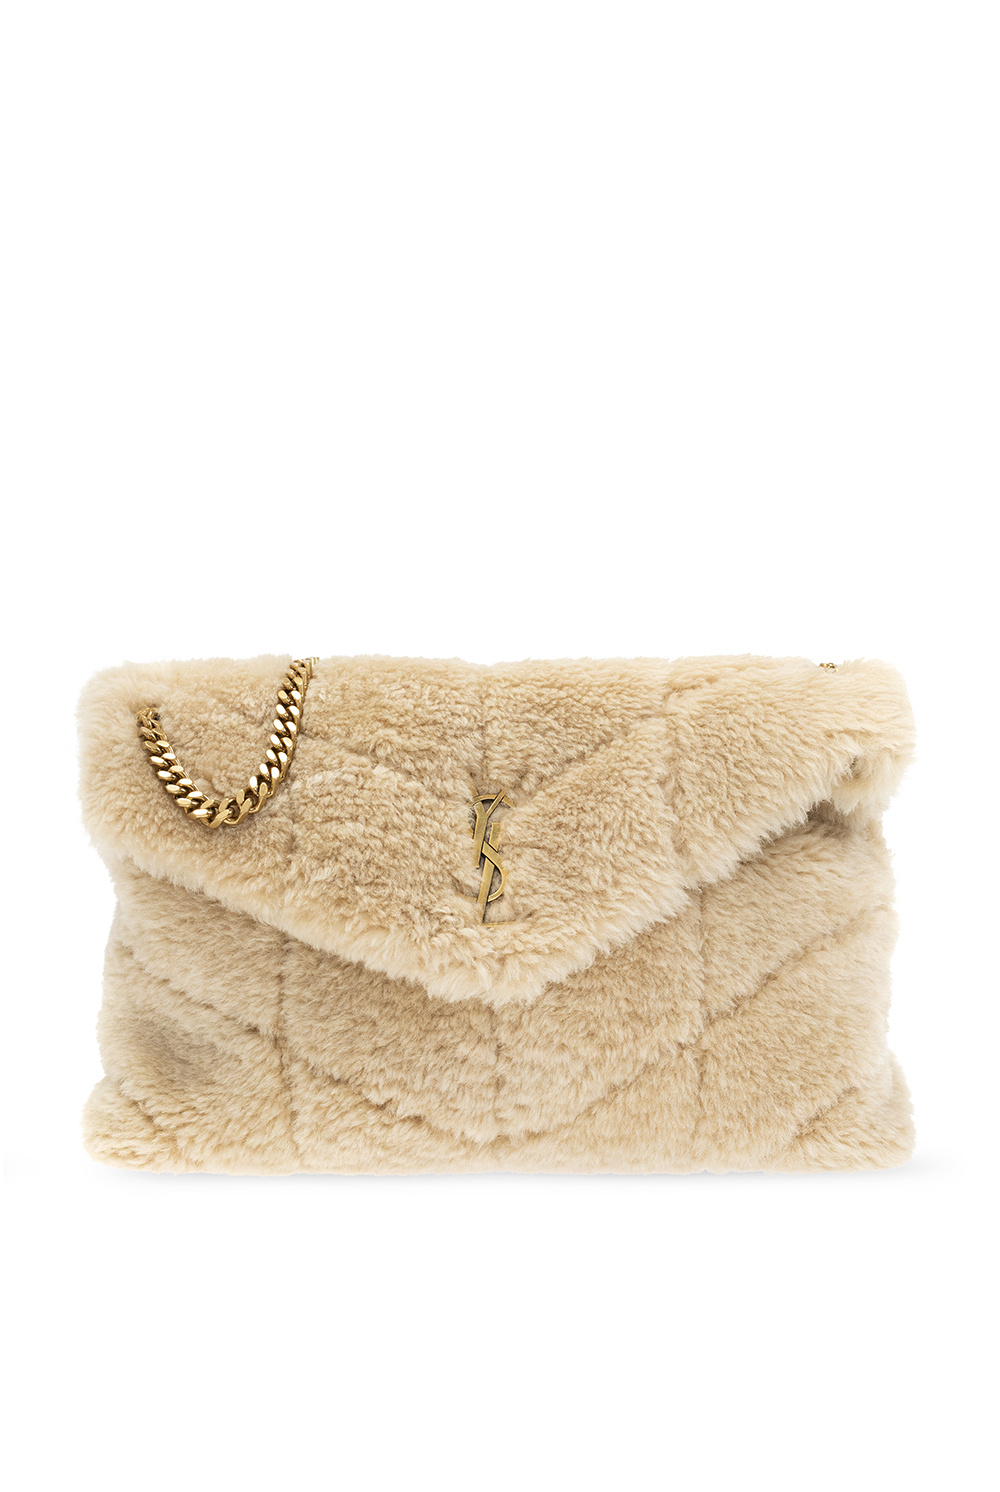 Cream 'Puffer Medium' fur shoulder bag Saint Laurent - Vitkac Sweden